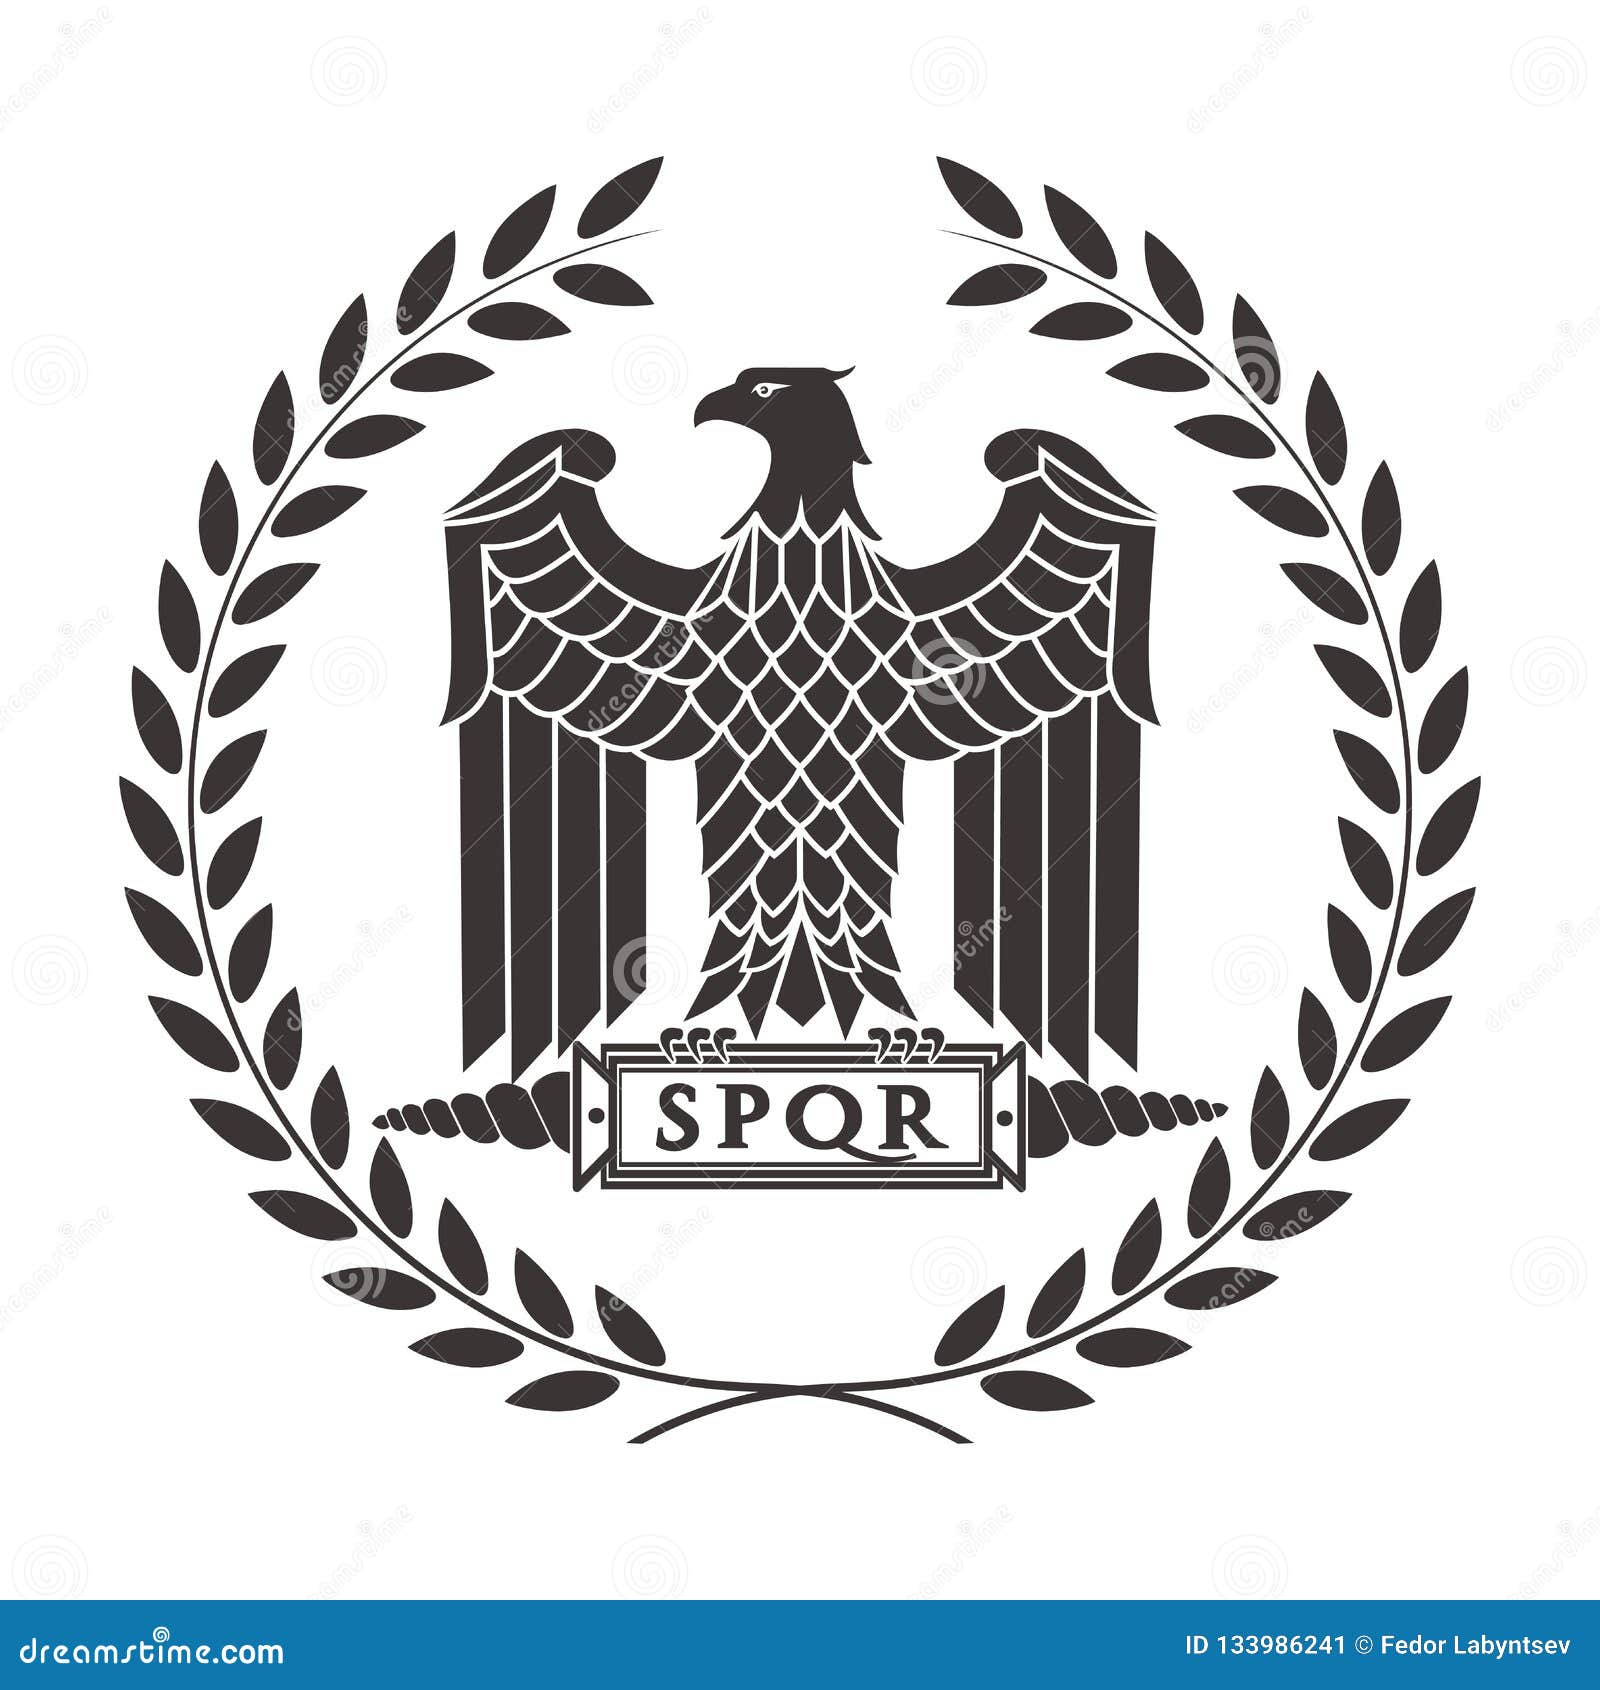 logo of the roman eagle.